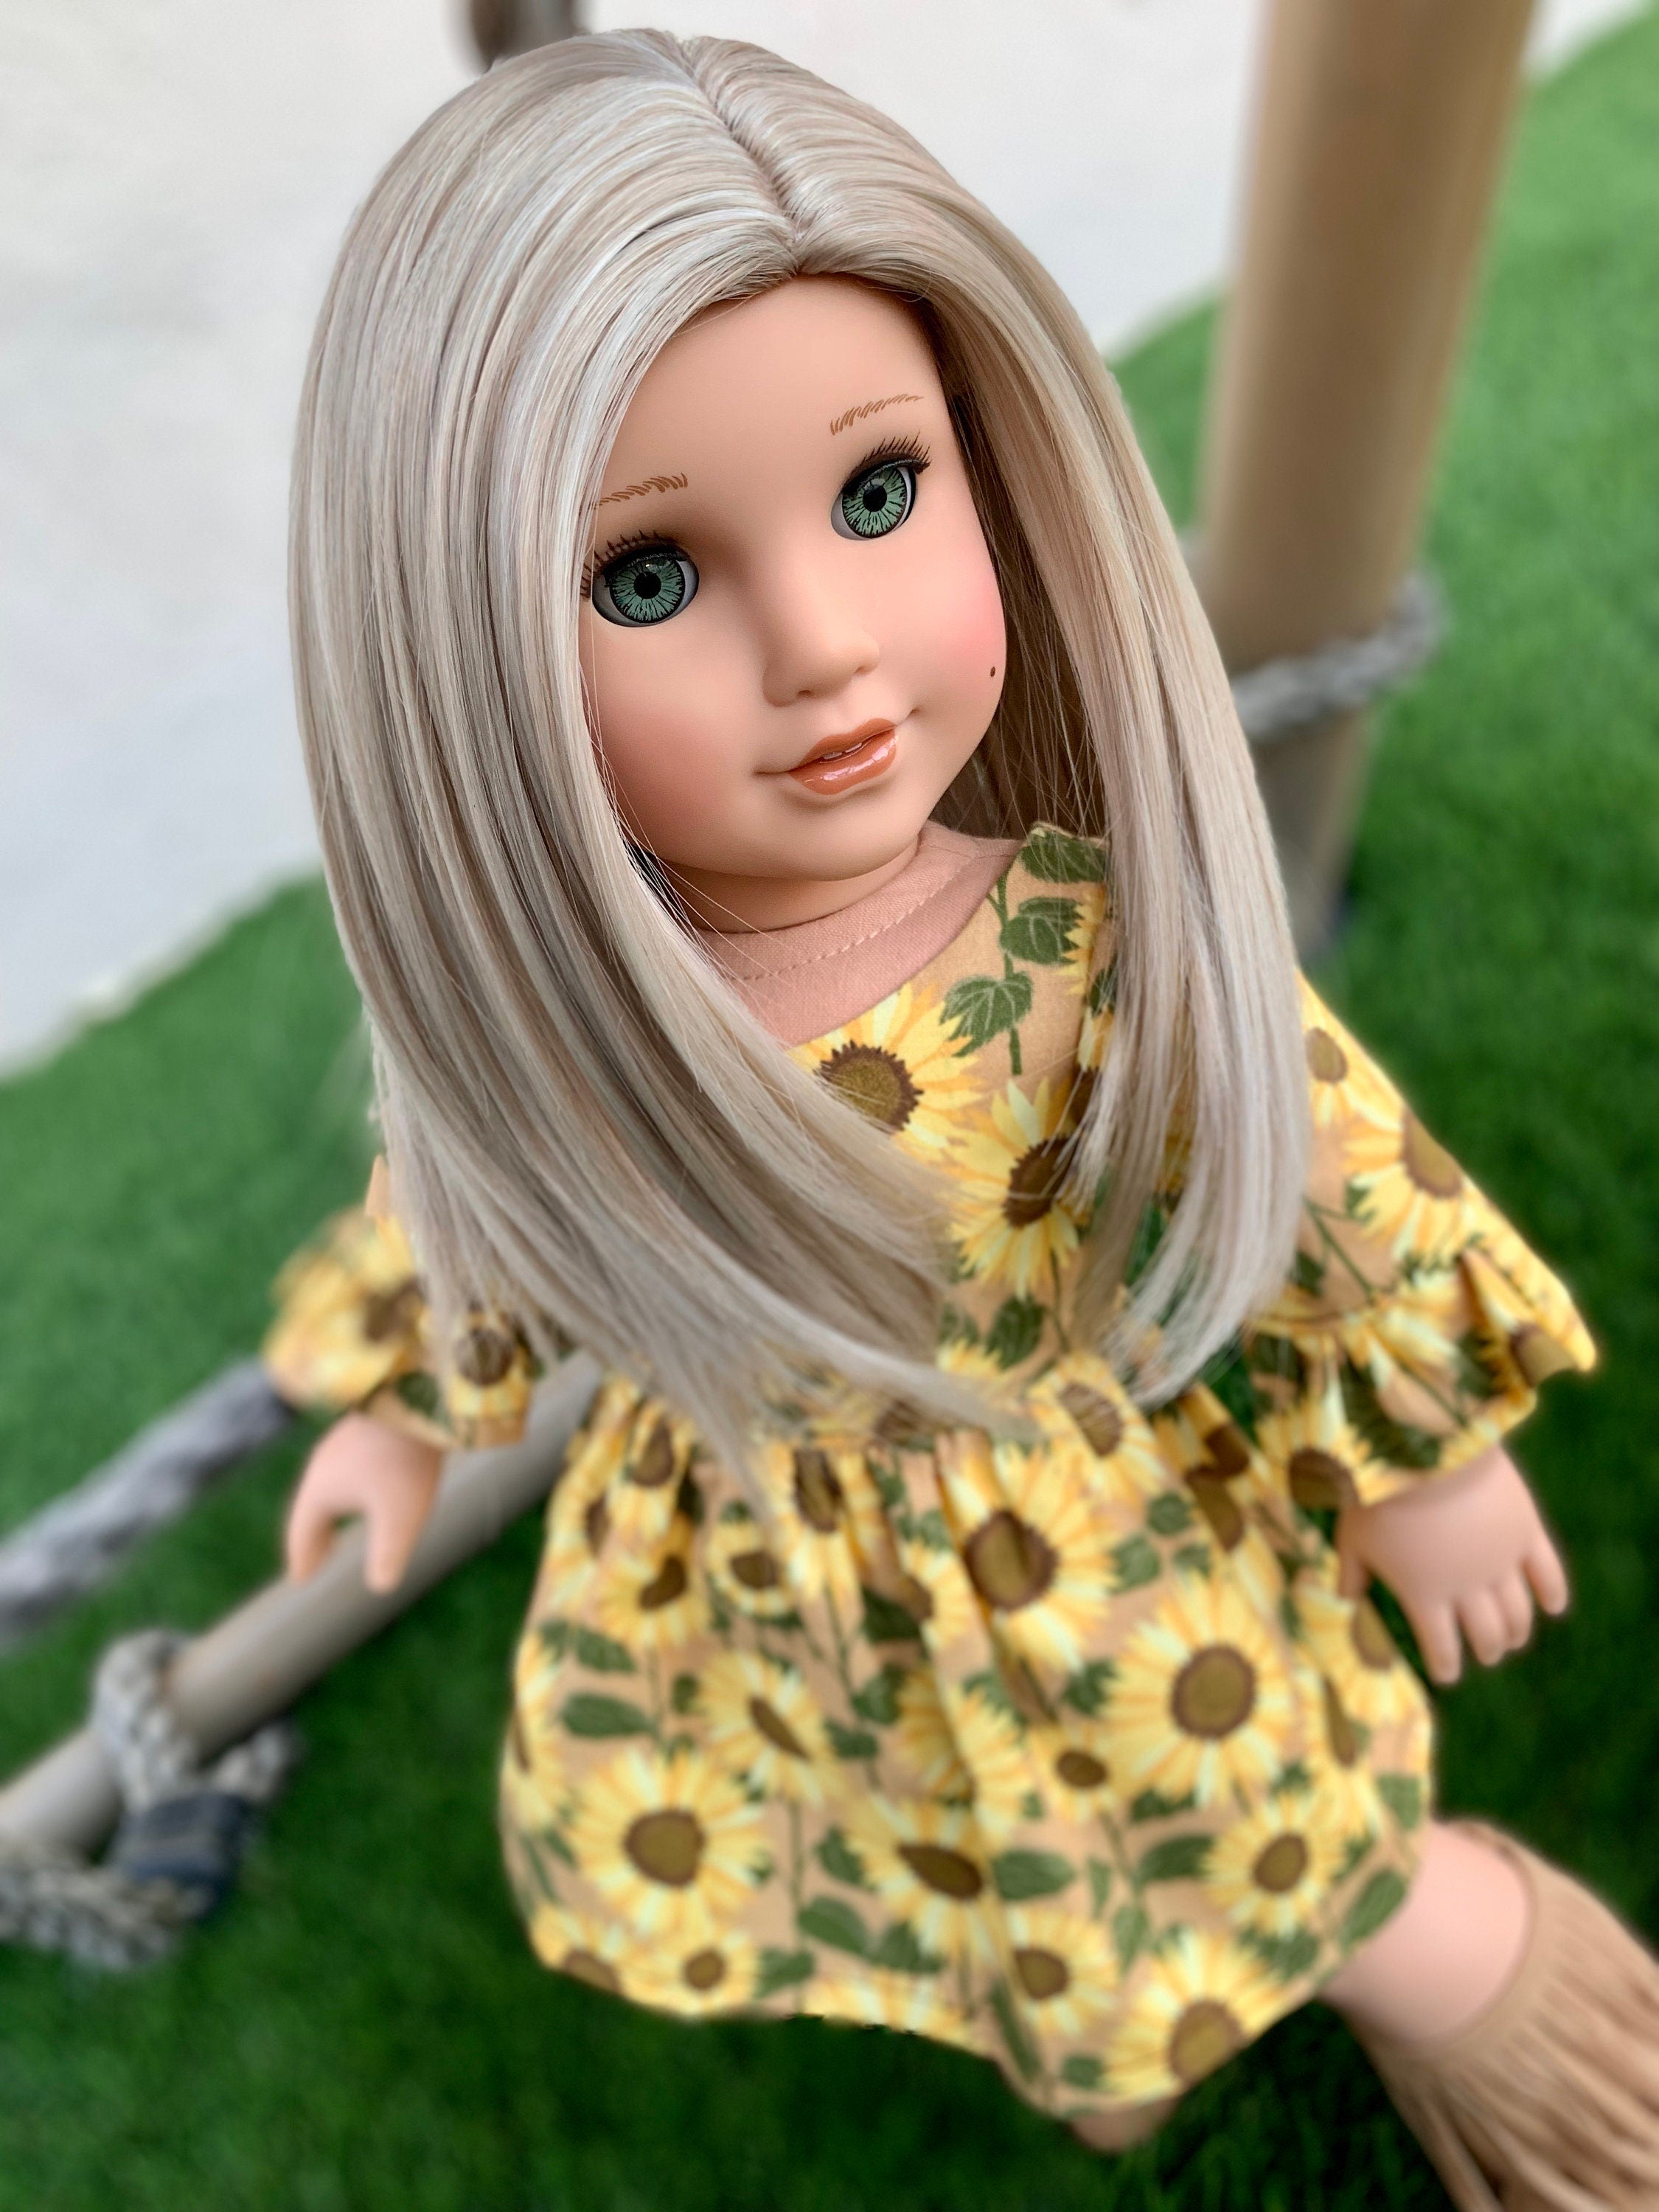 Custom doll wig for 18" American Girl Dolls Tangle Resistant - fits 10-11" head size of 18" dolls OG Blythe BJD Gotz  Ashy Blonde